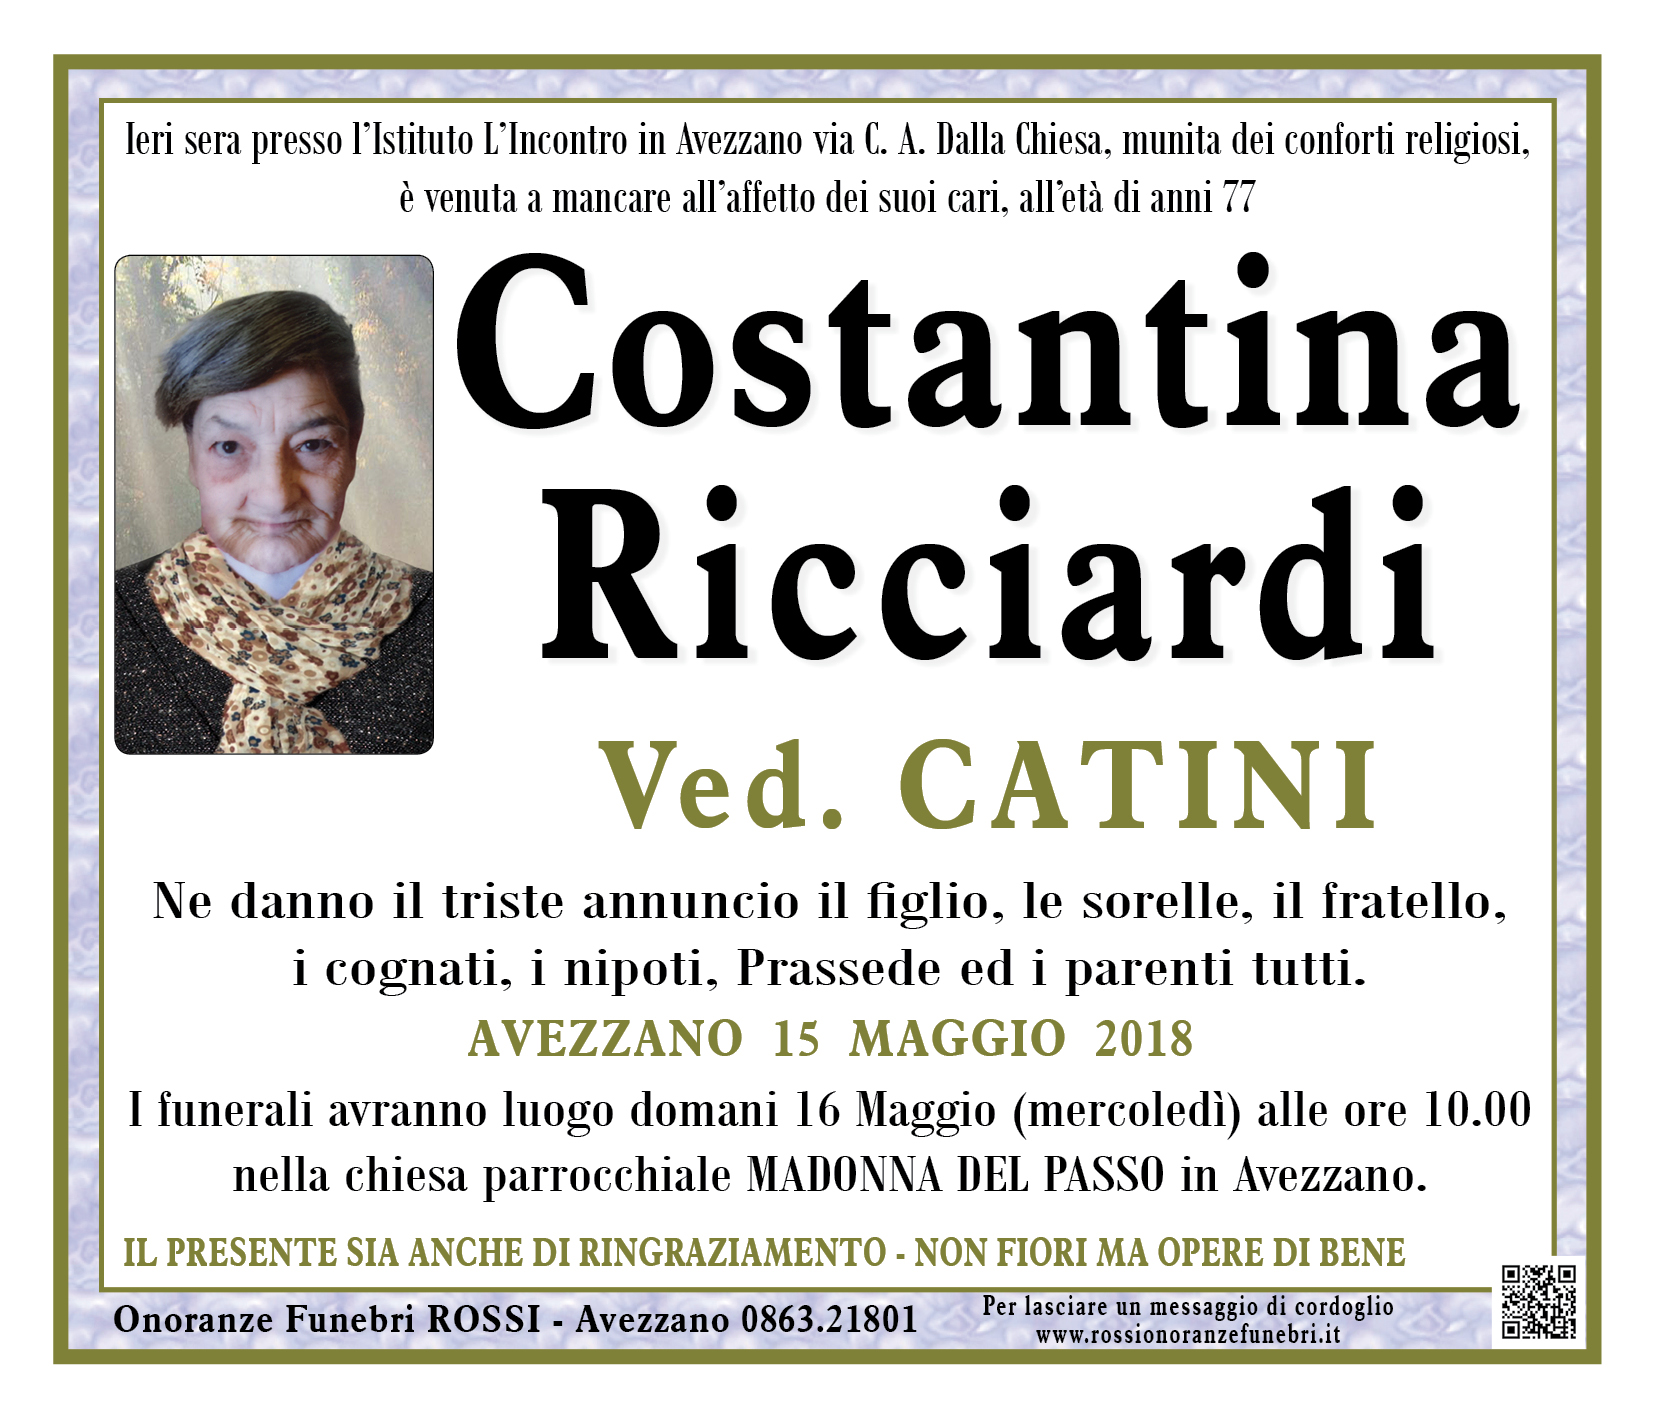 Costantina Ricciardi